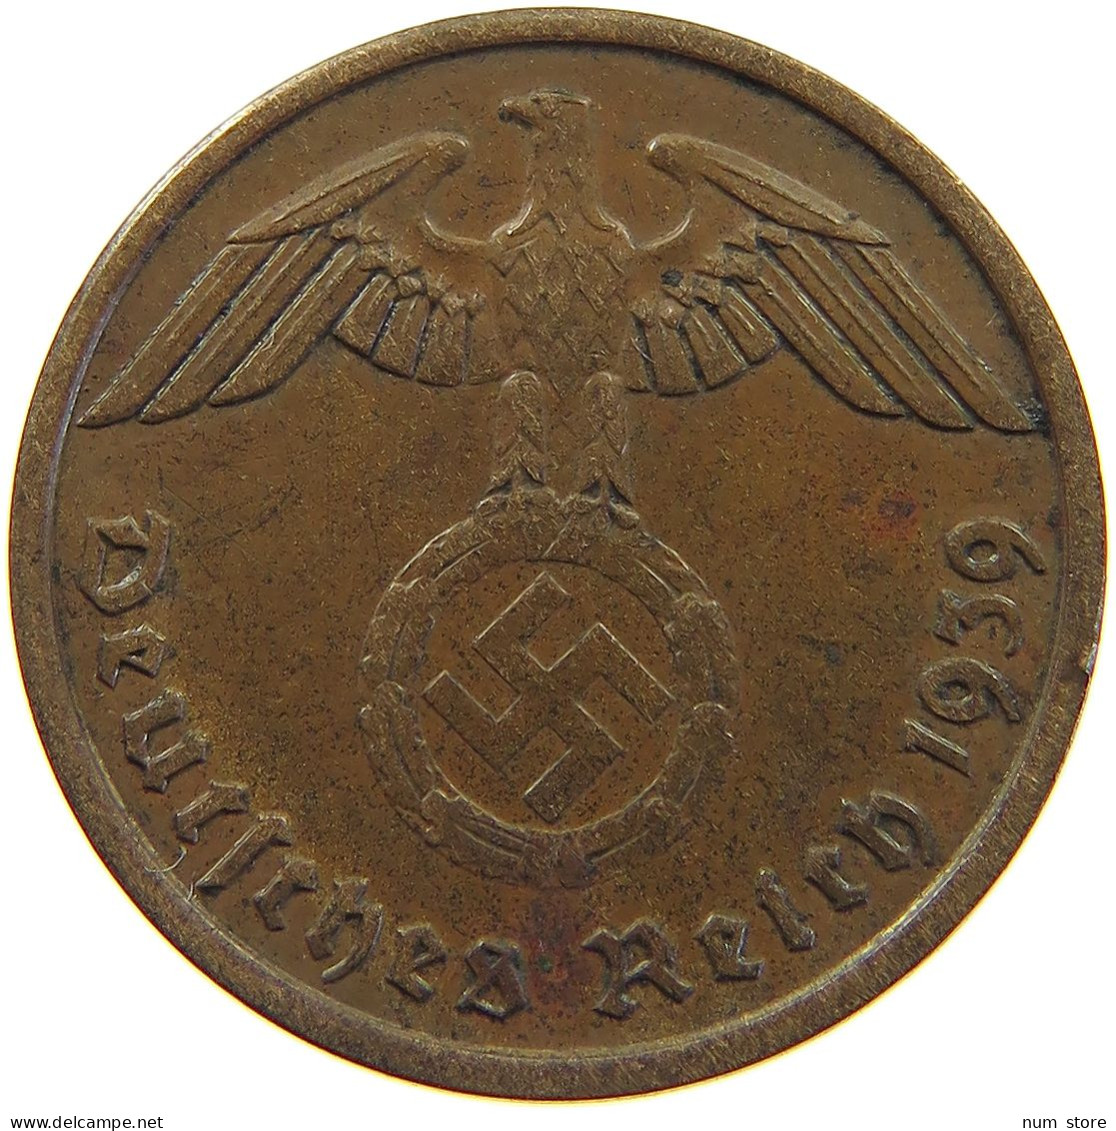 GERMANY 2 PFENNIG 1939 A #c081 0275 - 2 Reichspfennig